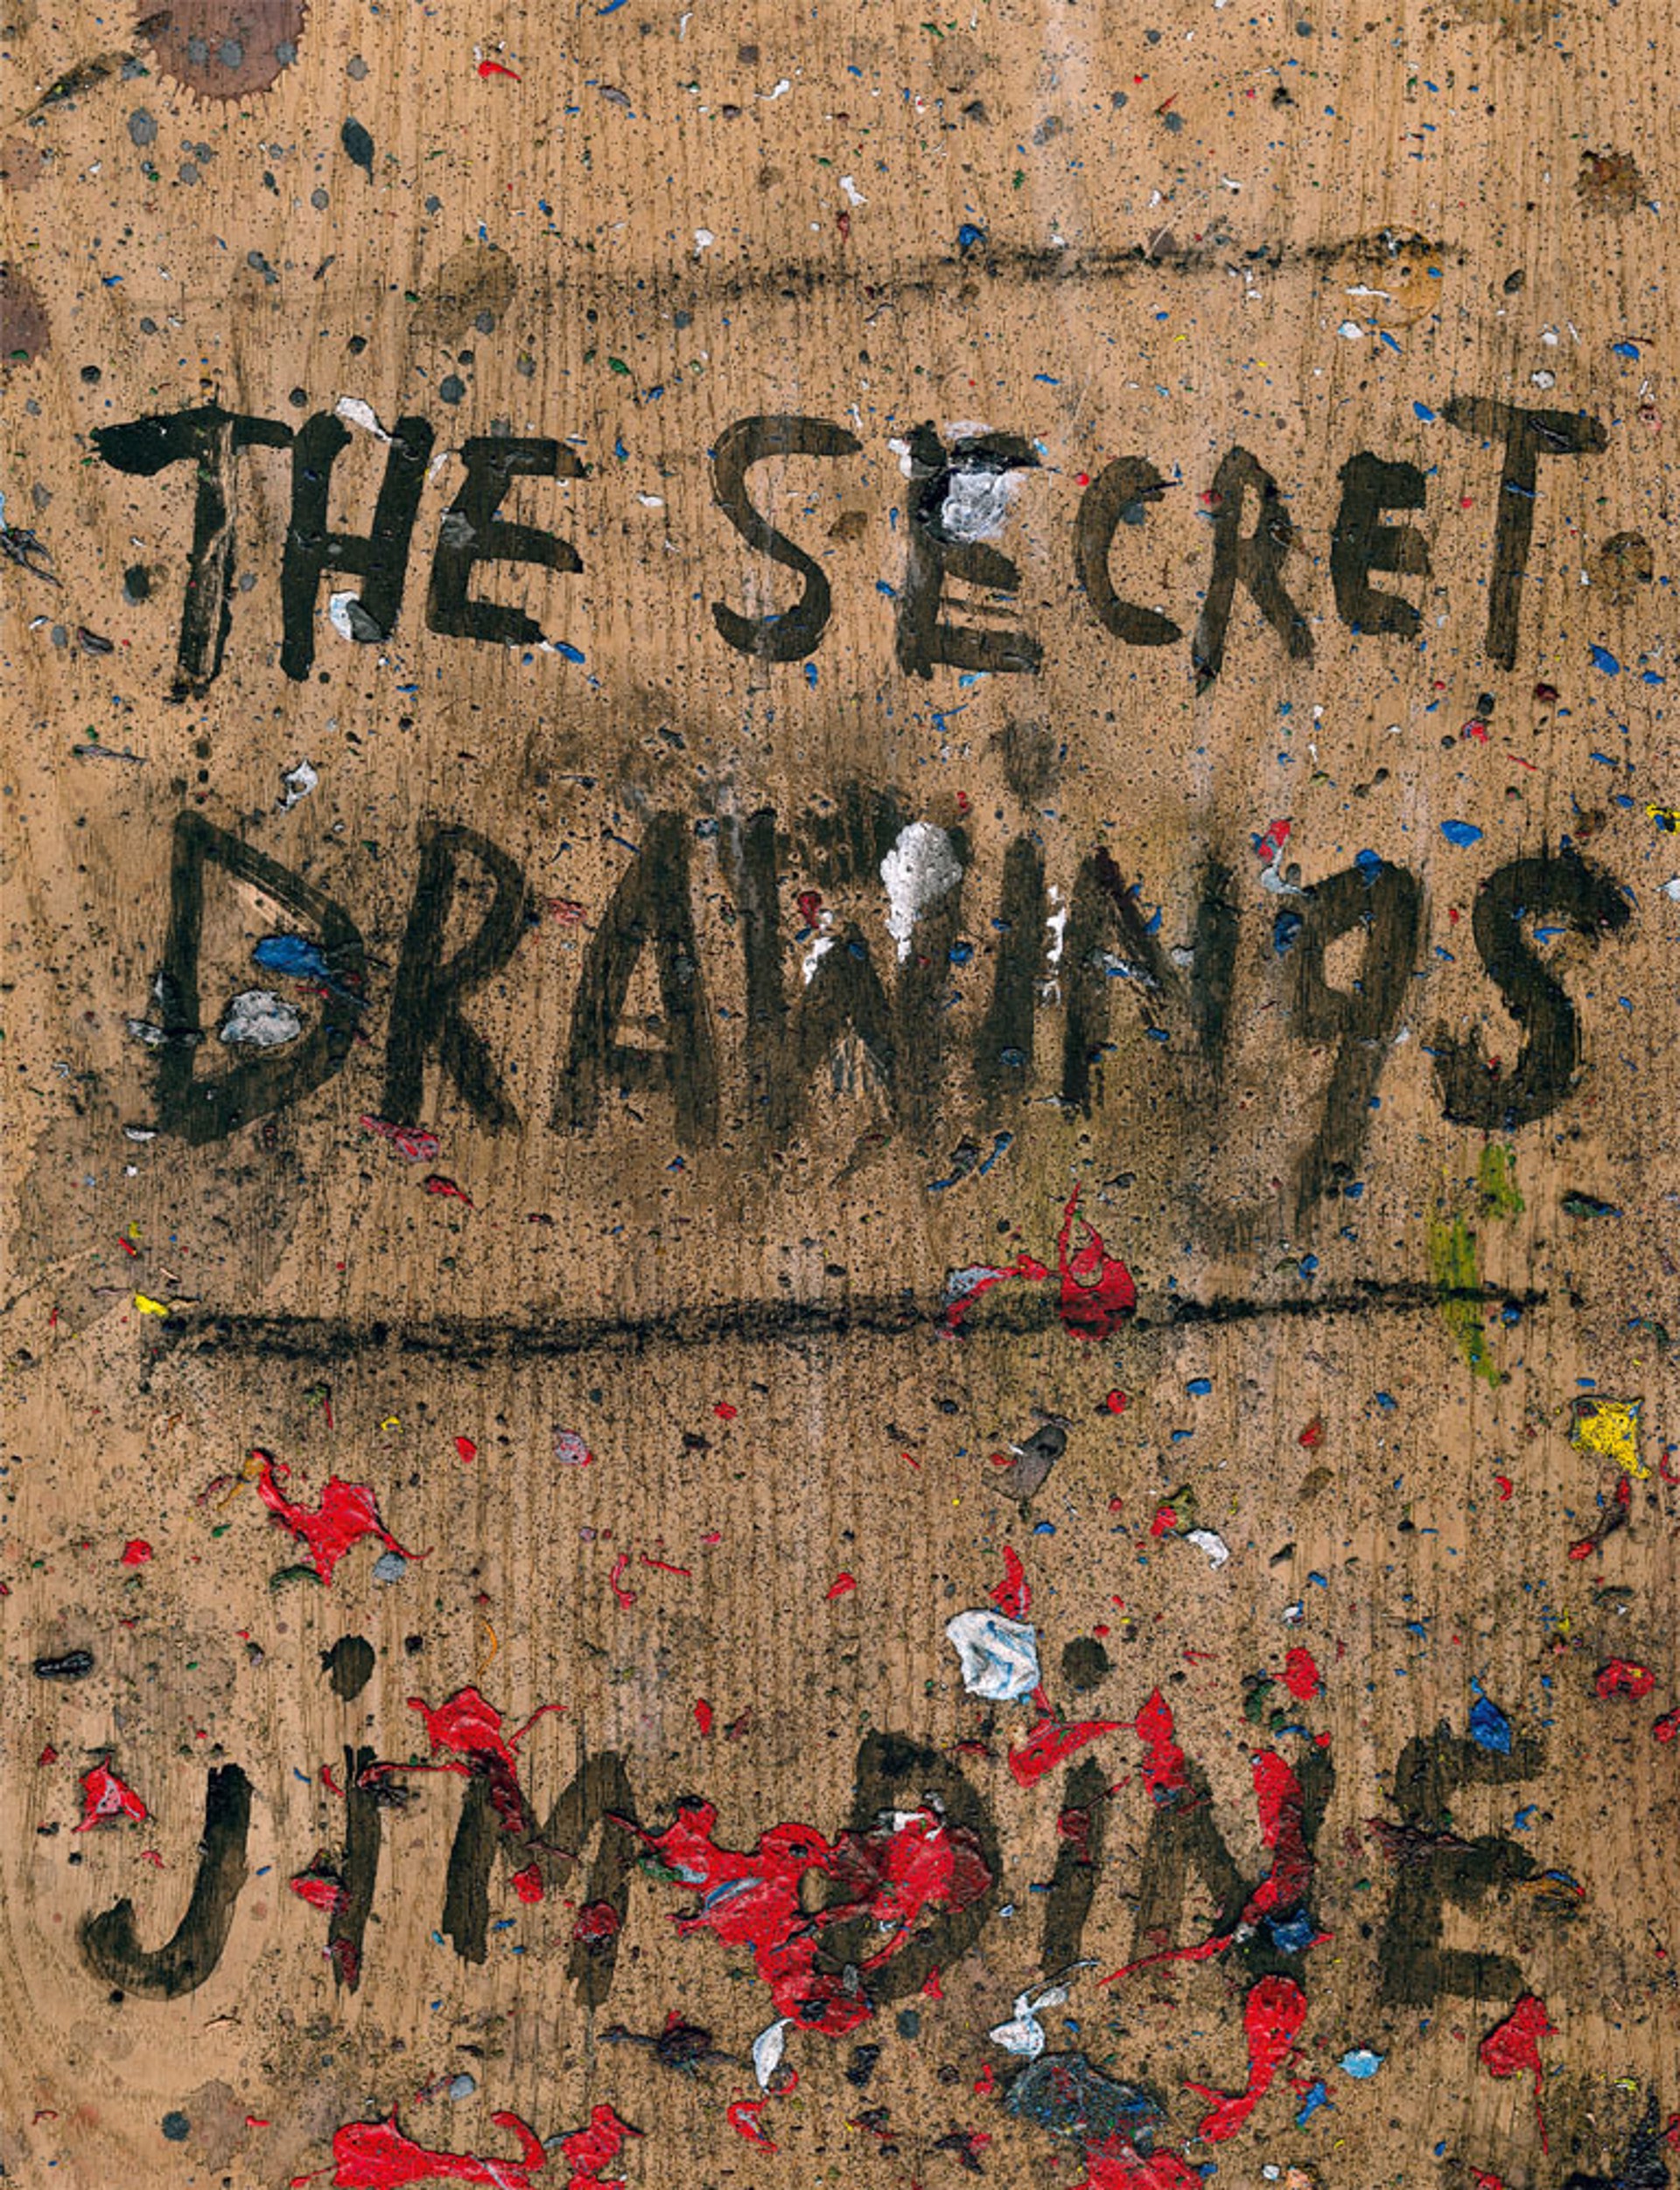 Jim Dine: The Secret Drawings by Jim Dine